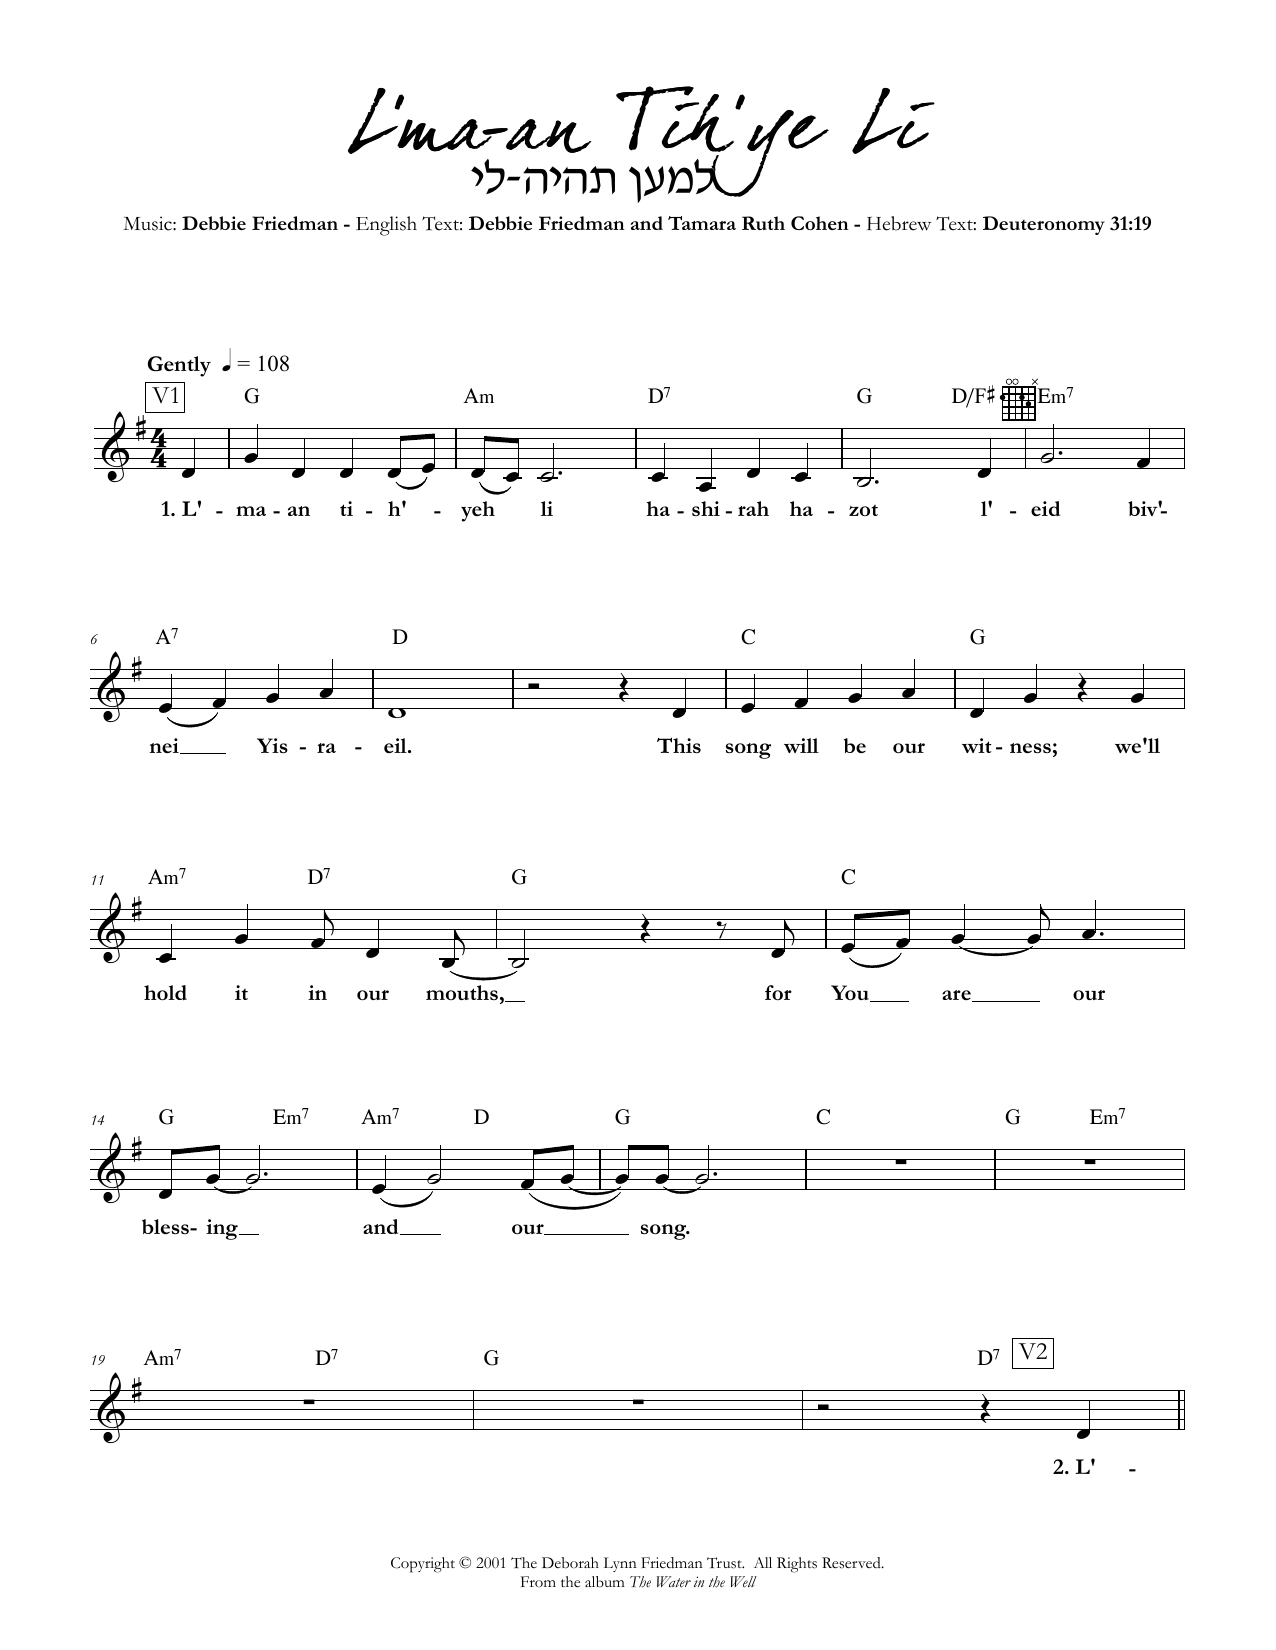 Download Debbie Friedman & Tamara Ruth Cohen L'ma-an Tih'ye Li Sheet Music and learn how to play Lead Sheet / Fake Book PDF digital score in minutes